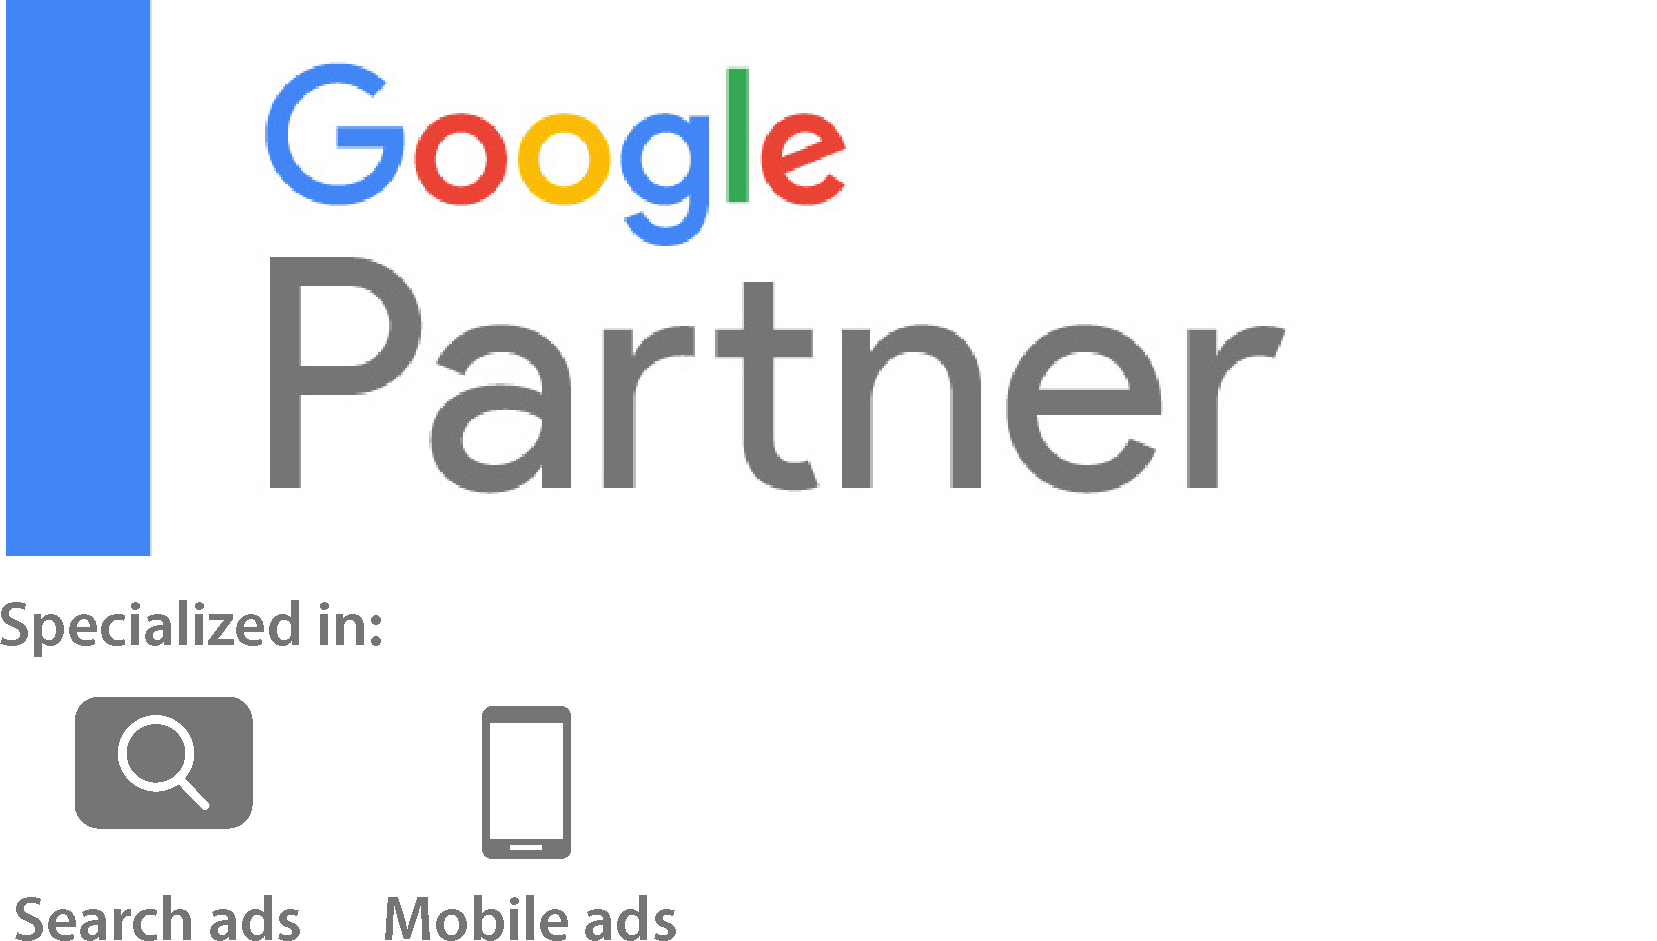 Google Partner
